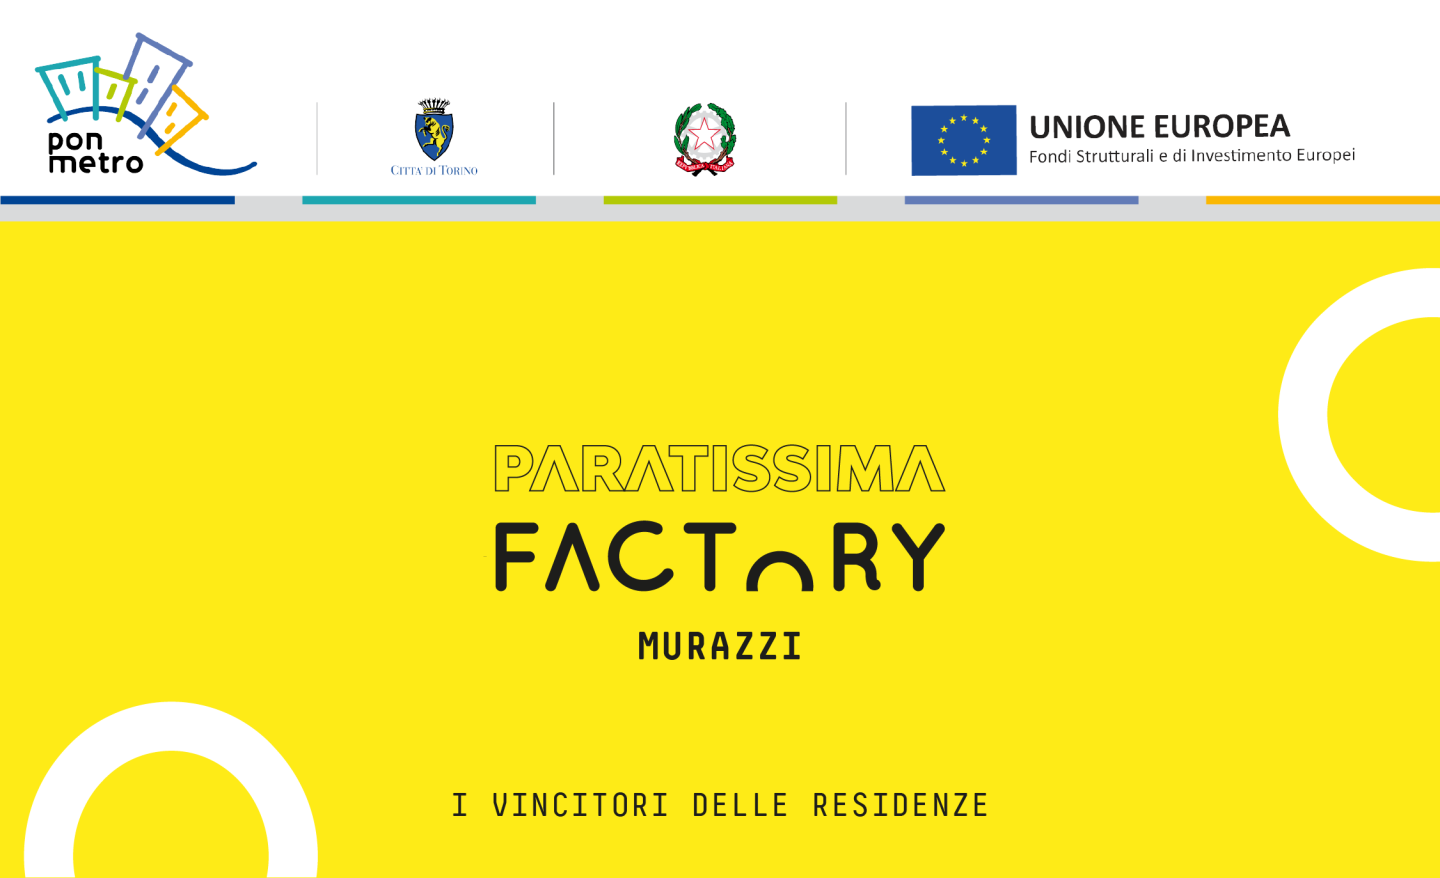 Paratissima Factory murazzi